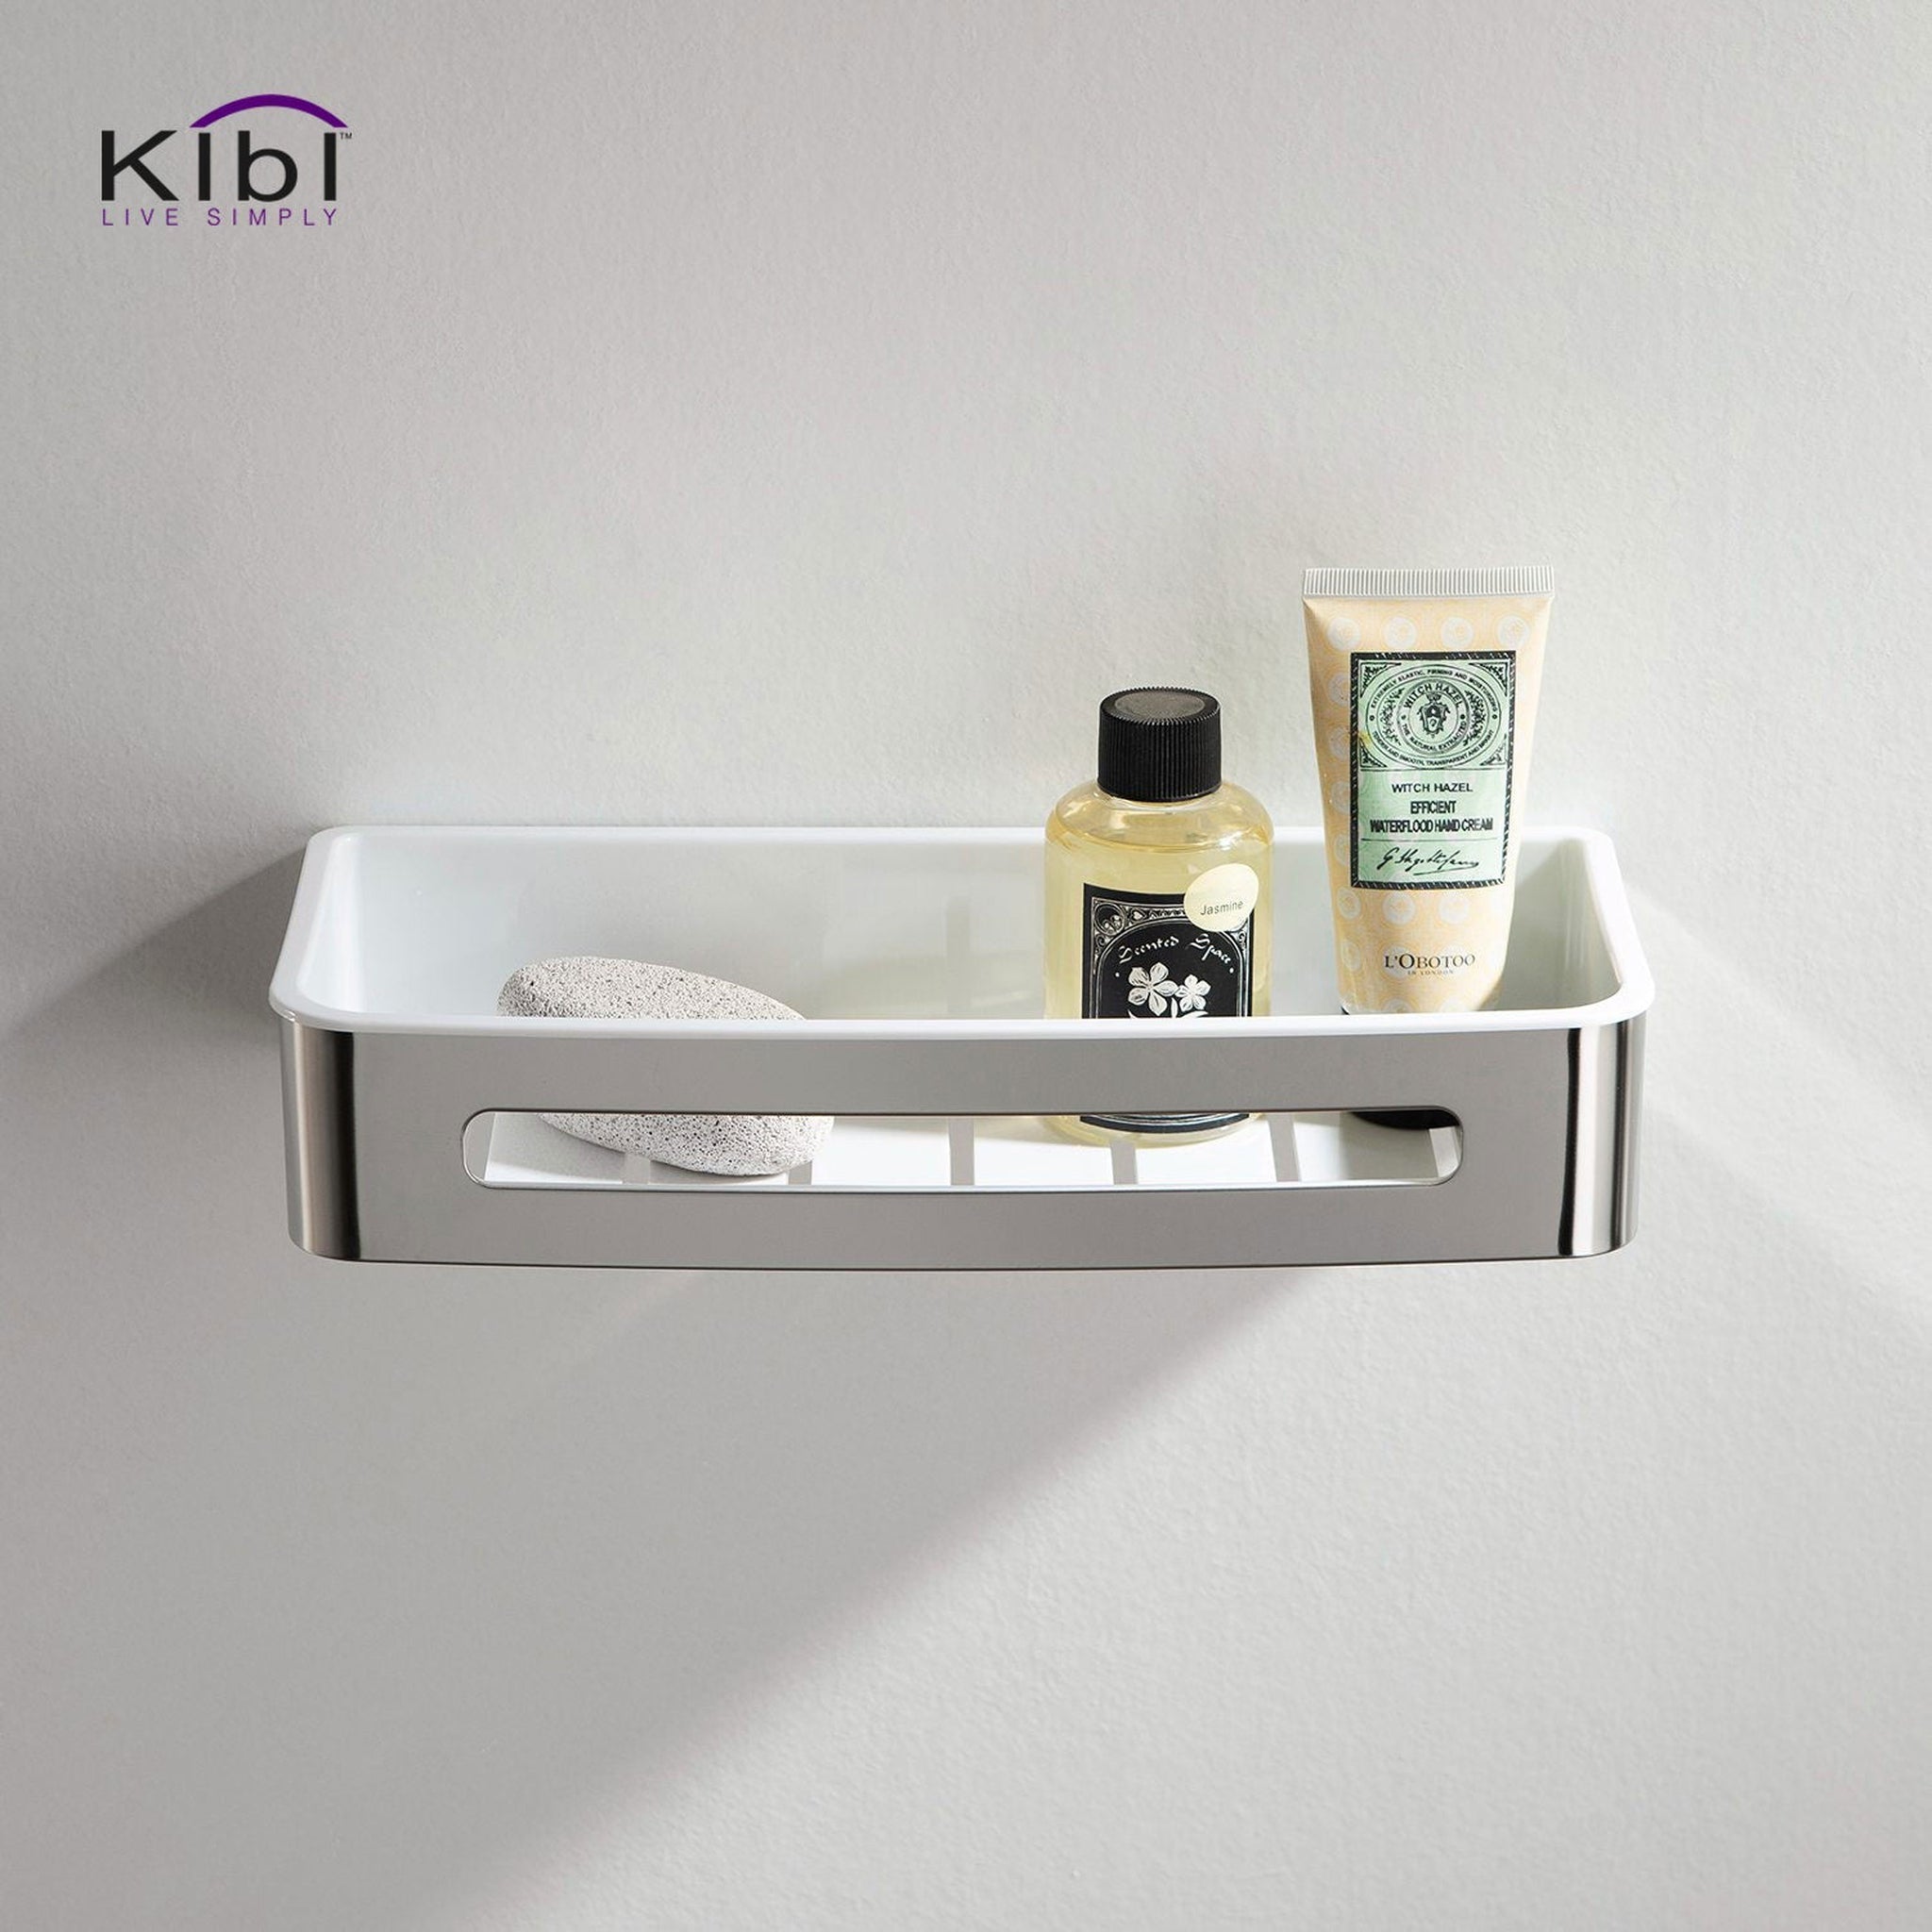 KIBI, KIBI Deco Bathroom Front Basket in Chrome Finish